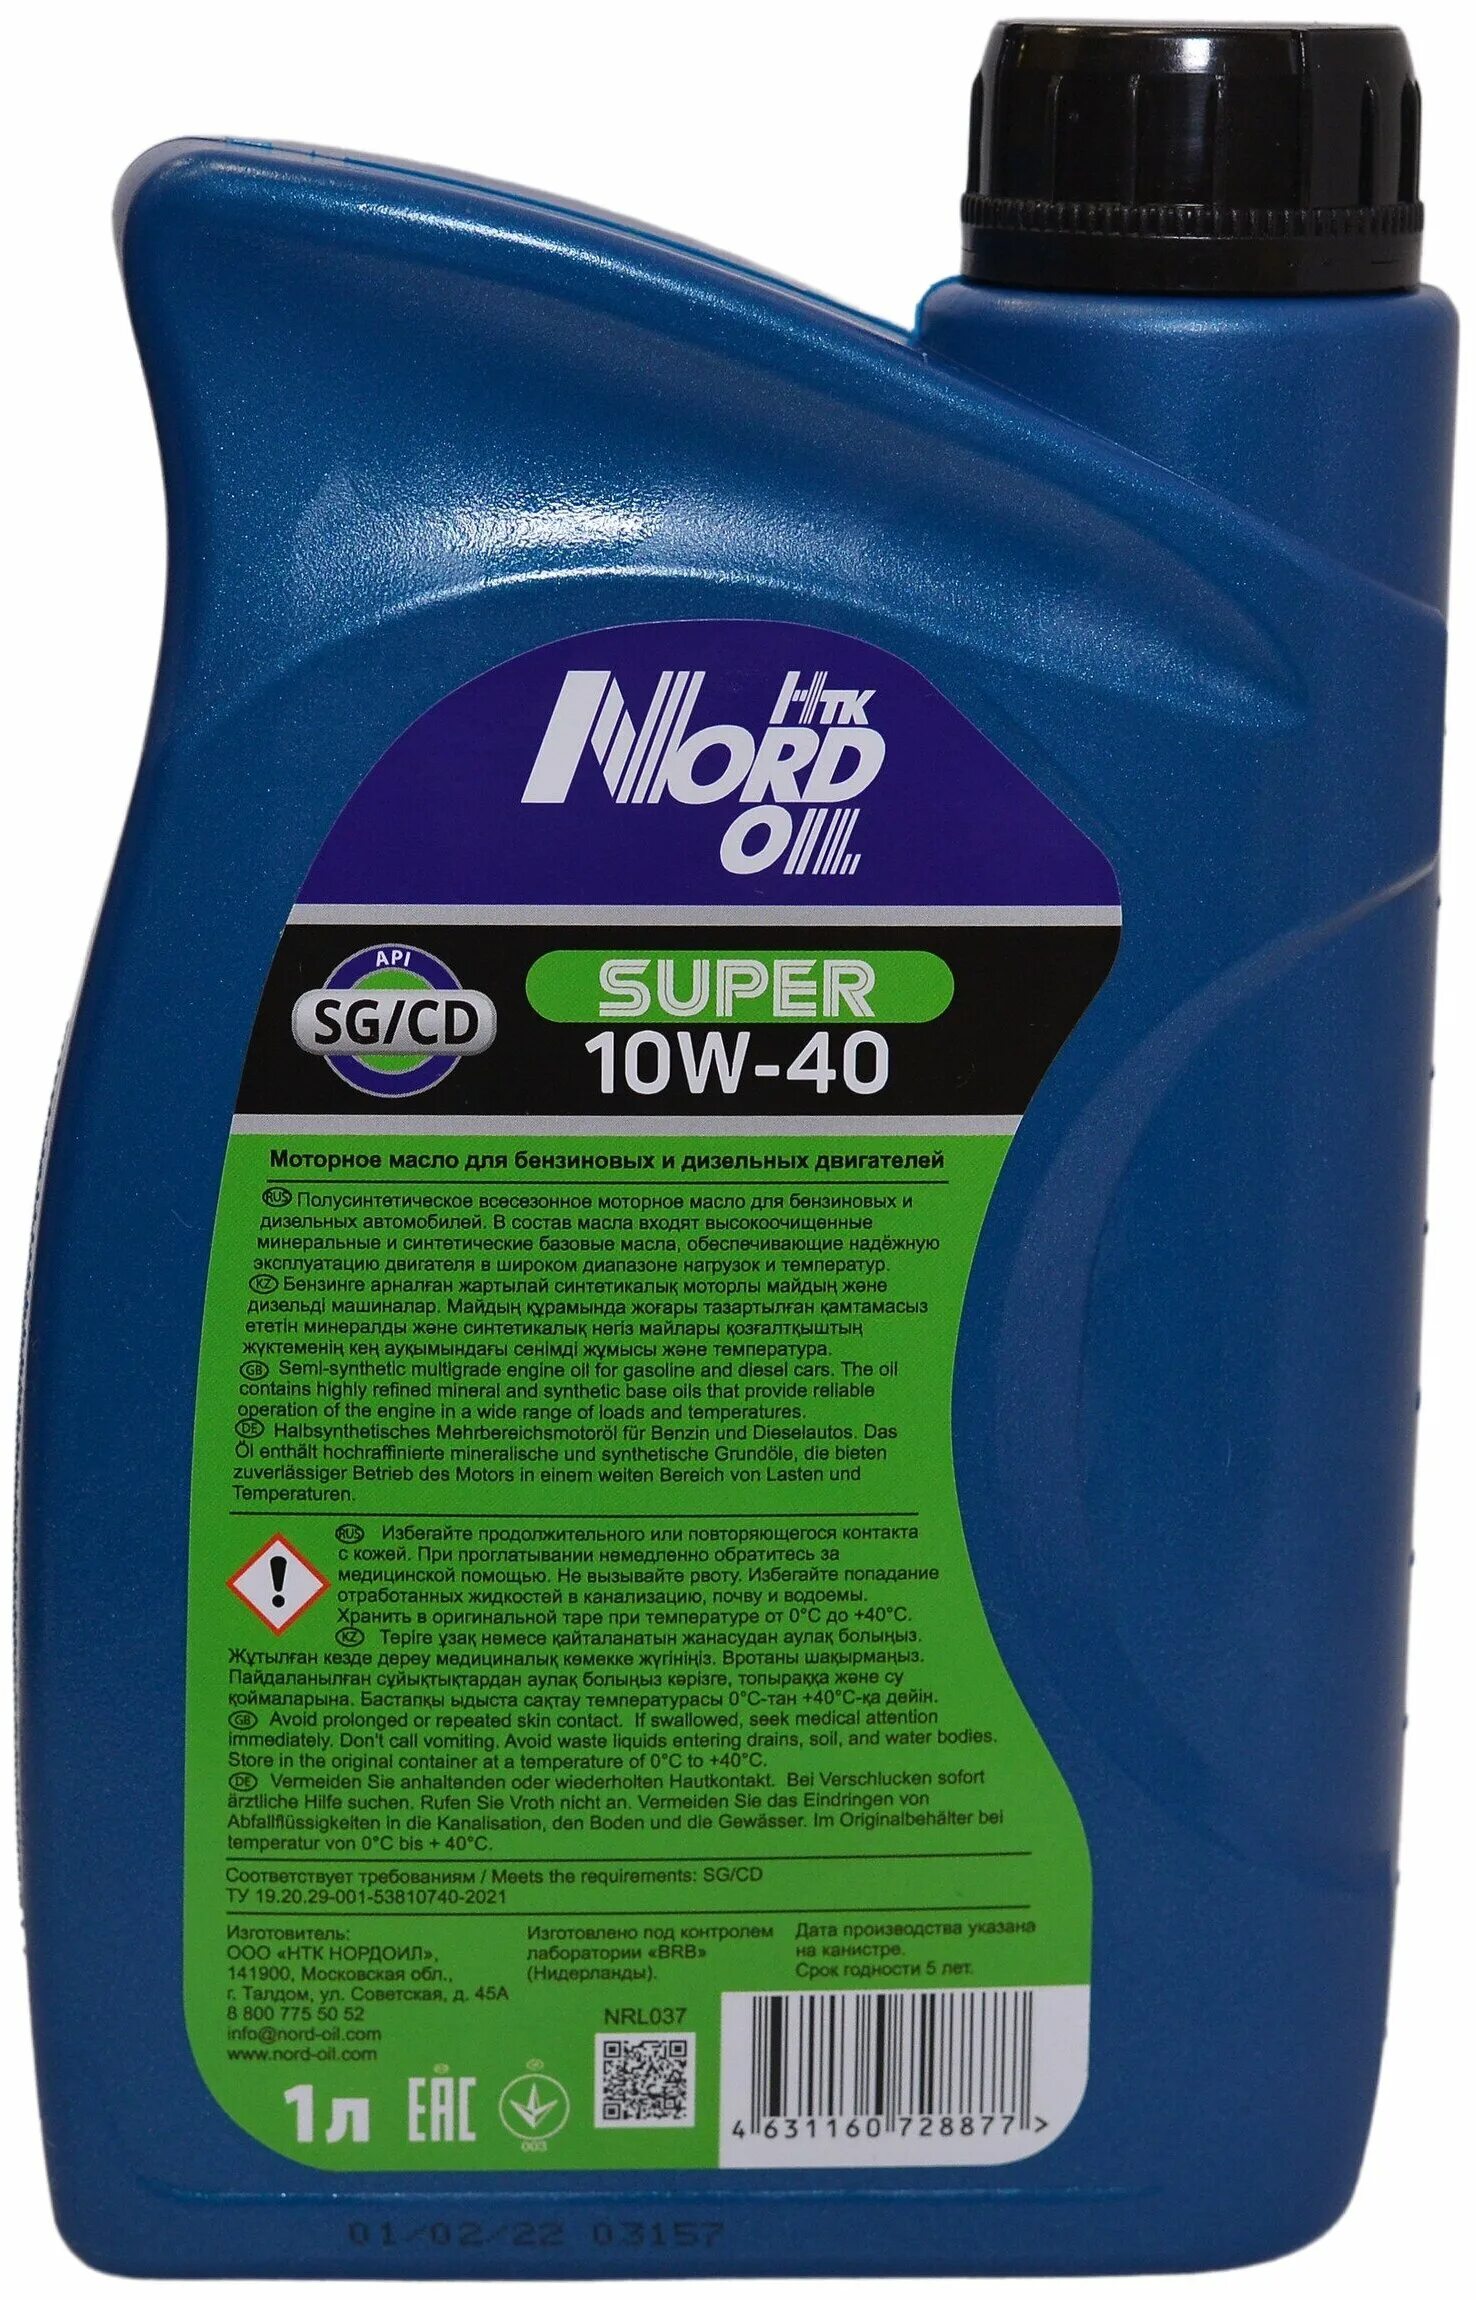 Моторное масло форум отзывы. Nord Oil super 10w-40 SG CD П С 4л. 10w40 Nord Oil super SG/CD масло моторное, 1 л. Nrl038 Nord Oil масло Nord Oil super 10w-40 SG/CD 4л. Моторное масло super Hoss 10w40.